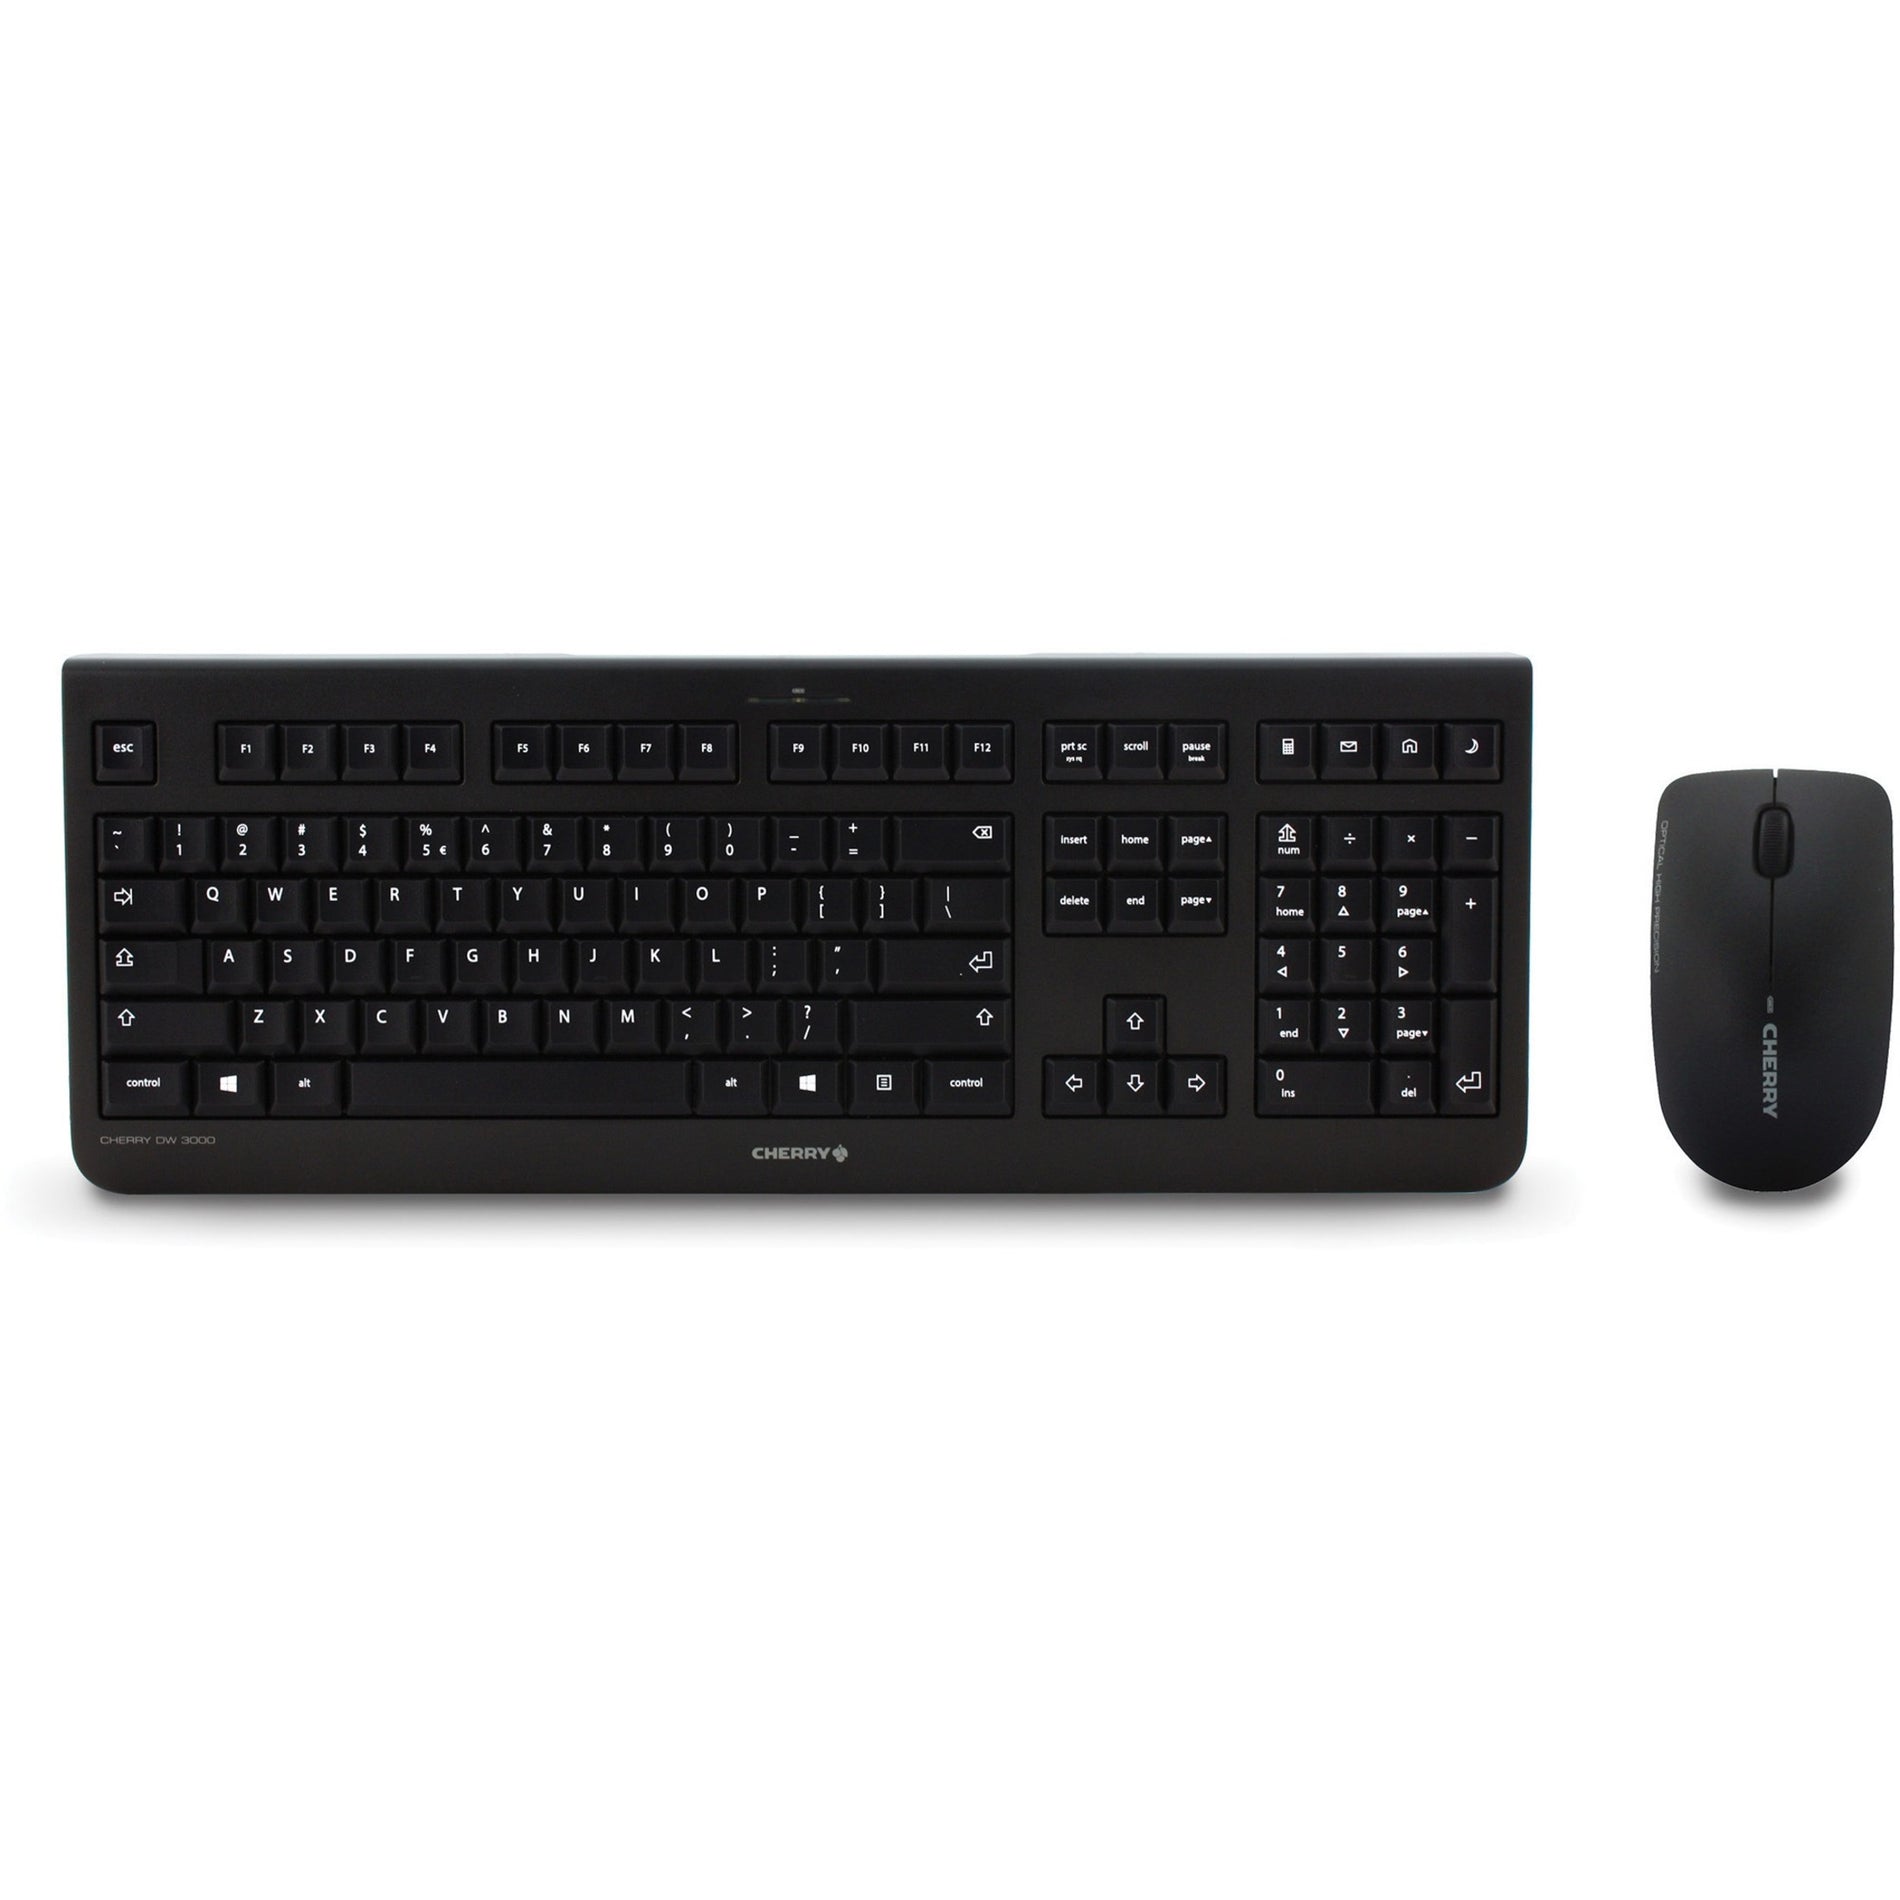 CHERRY JD-0710EU-2 DW 3000 Wireless Keyboard and Mouse, 3 Year Warranty, Plug & Play, Quiet Keys